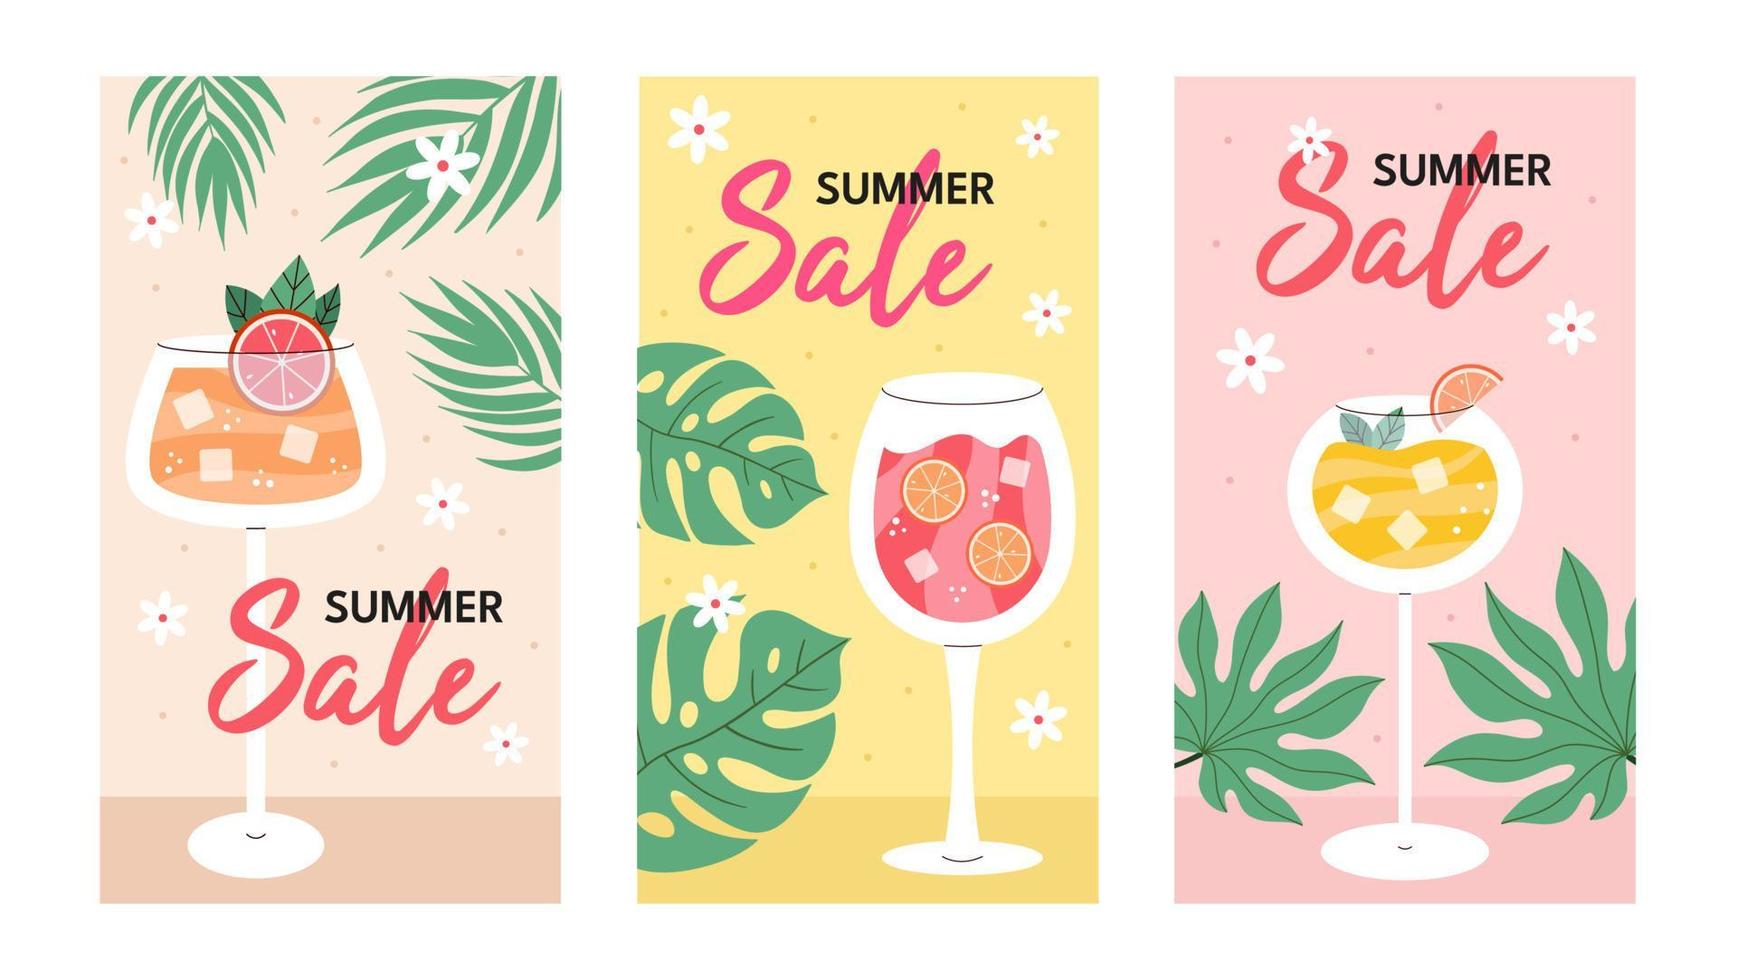 Summer sale stories backgrounds vector